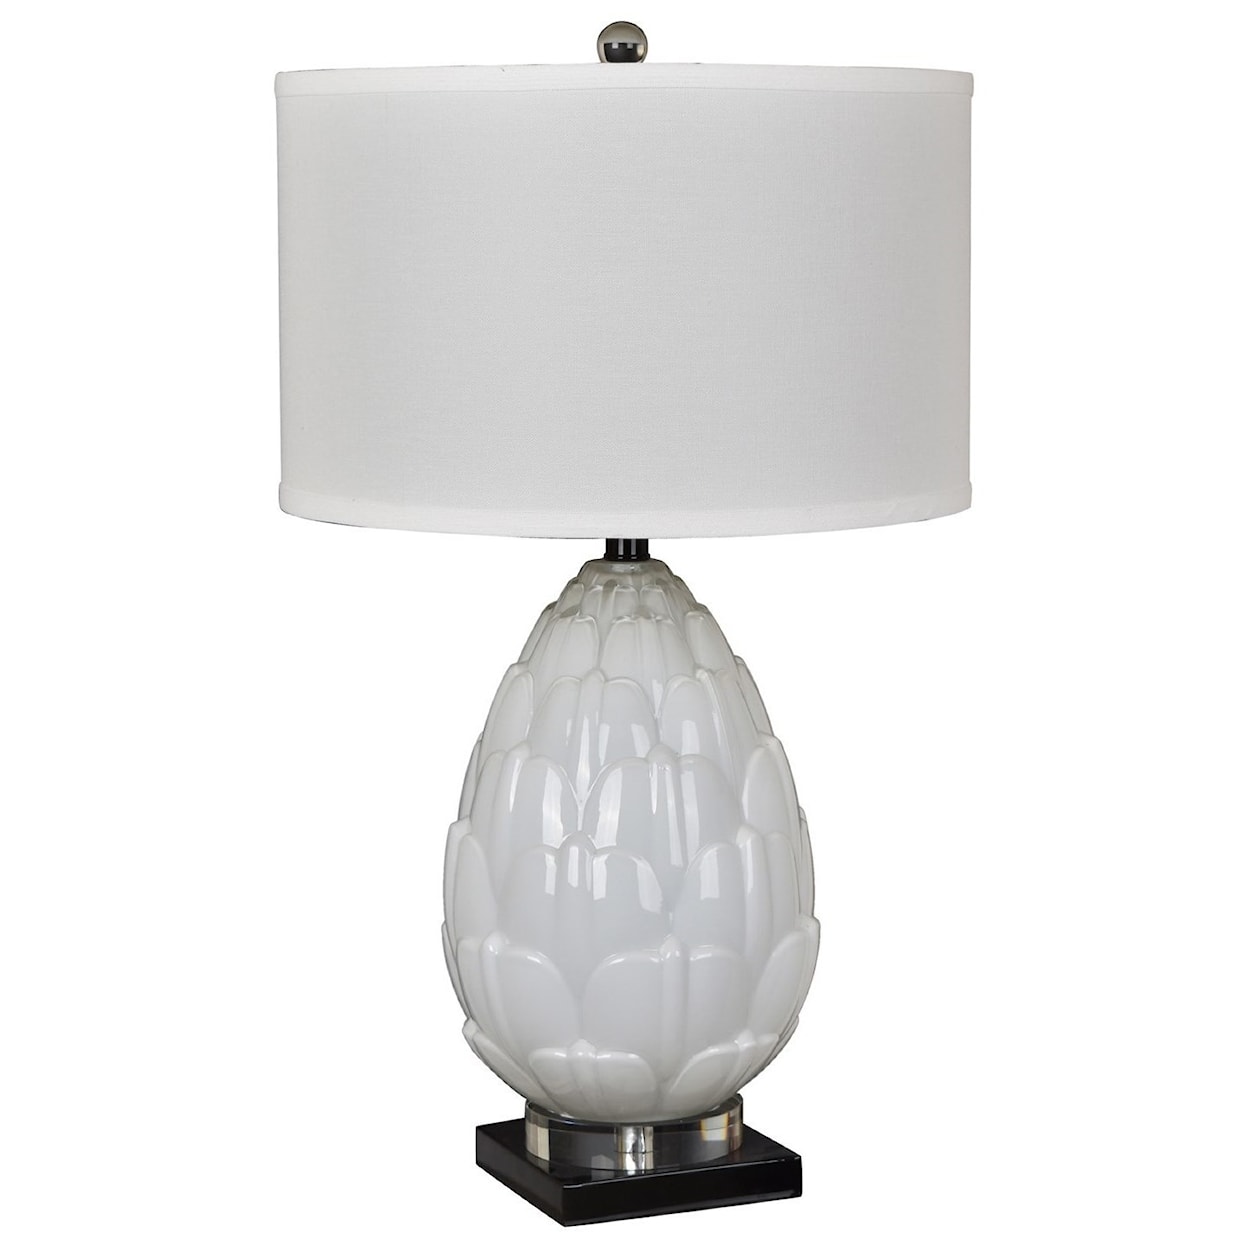 Crestview Collection Lighting Artichoke Table Lamp